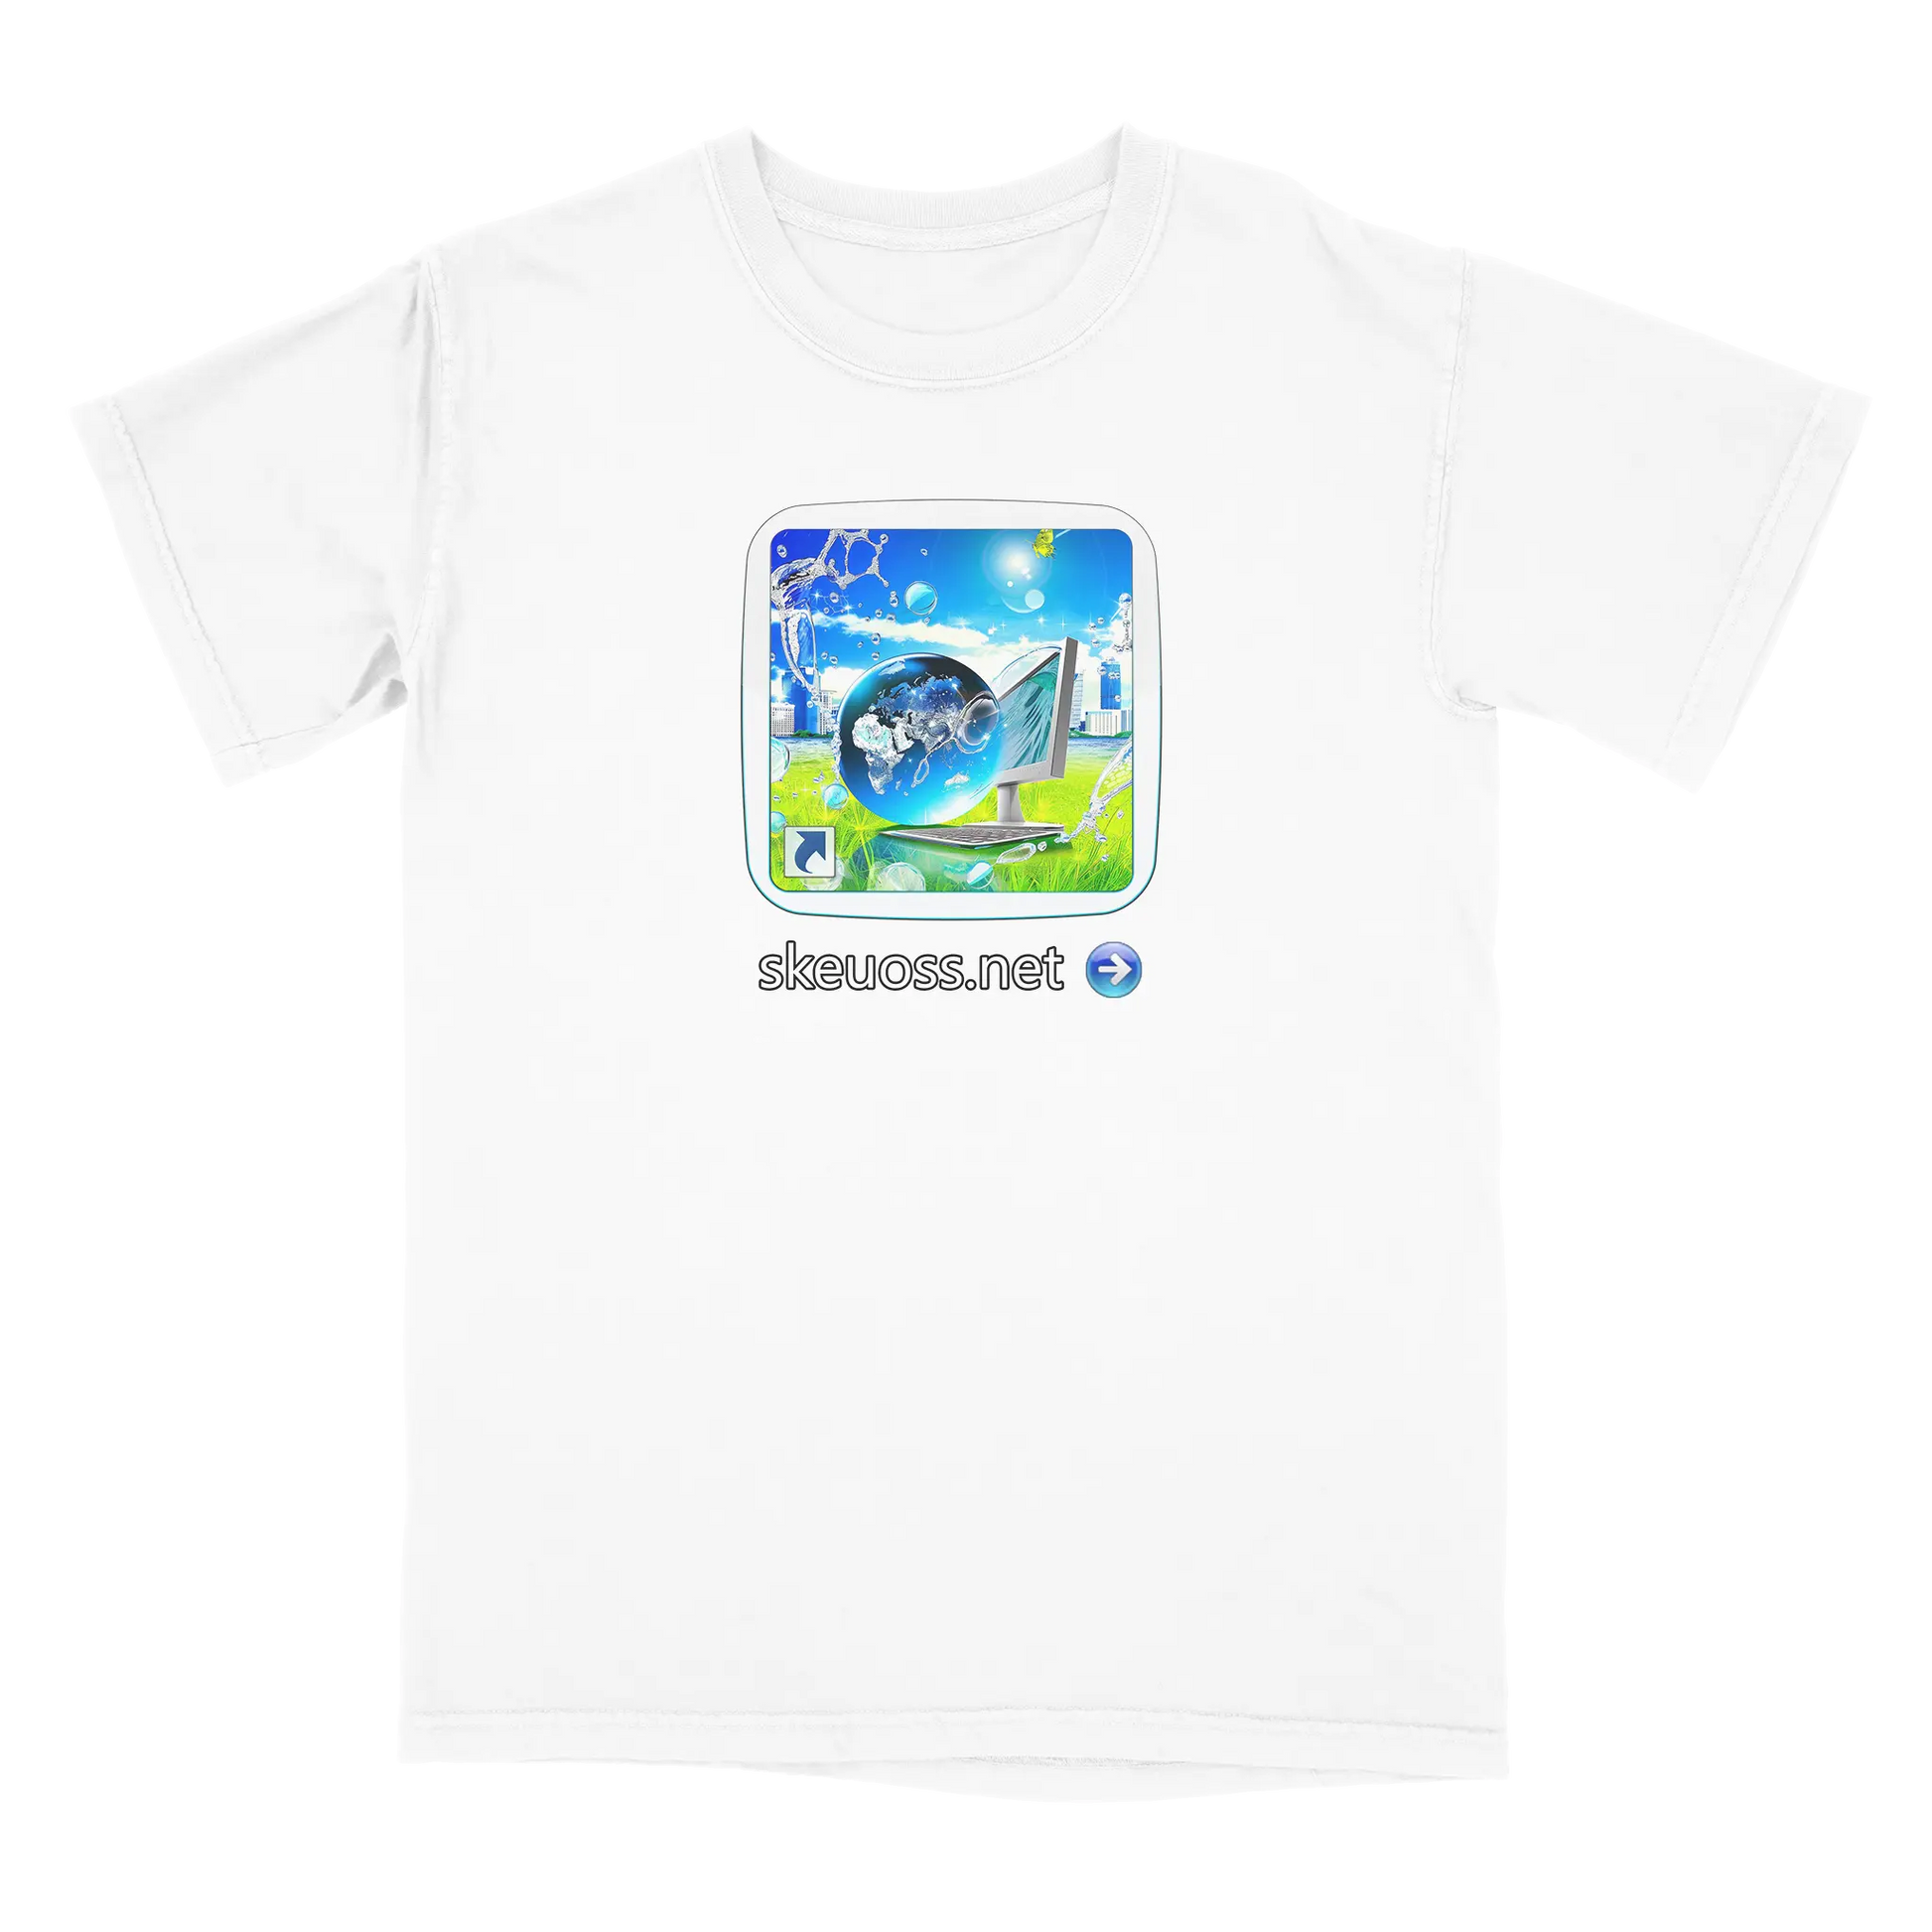 Frutiger Aero T-shirt - User Login Collection - User 364